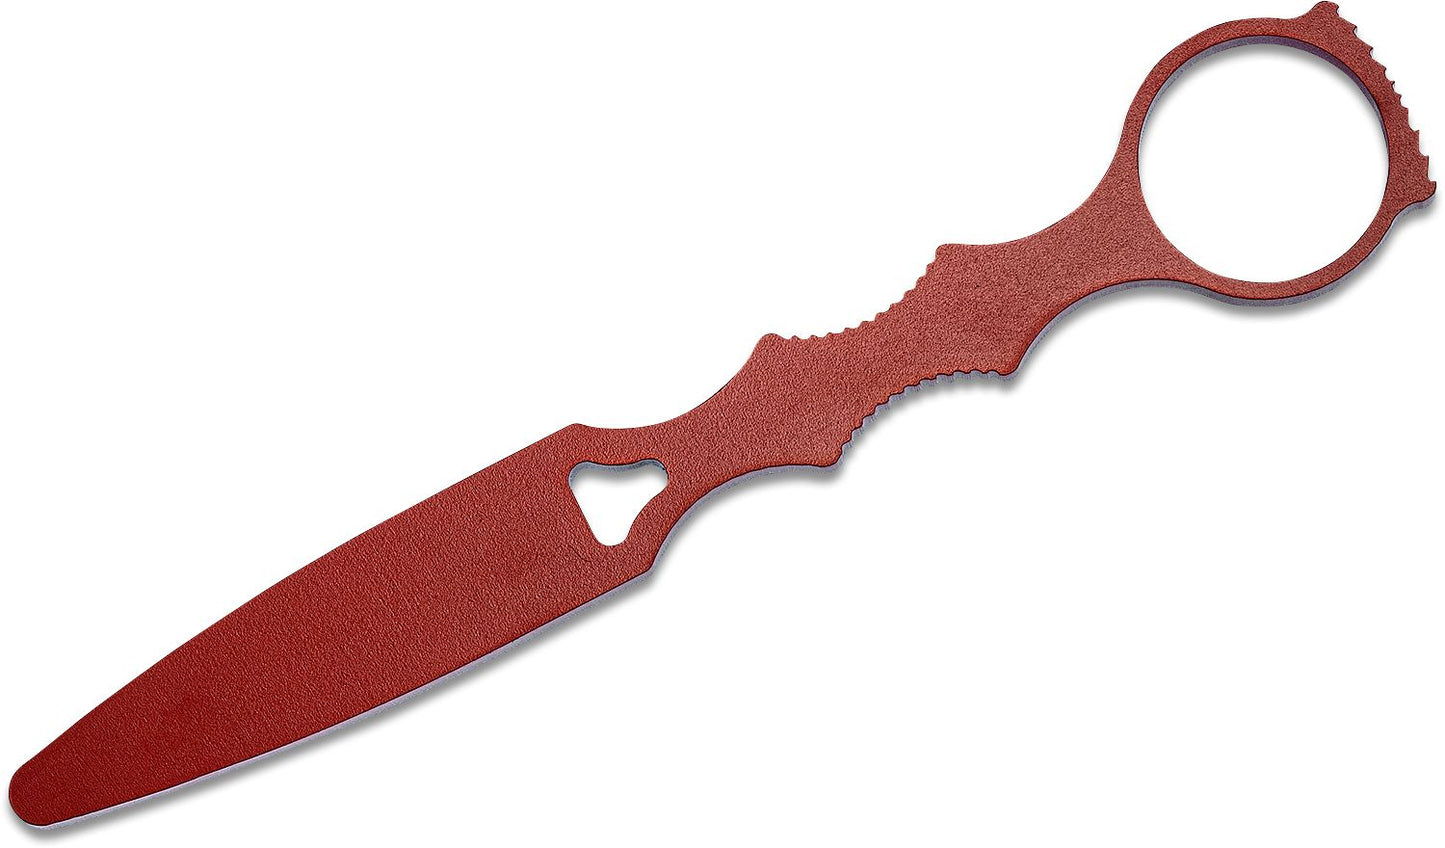 176T SOCP Training Dagger 2.78" Red Blade, No Sheath